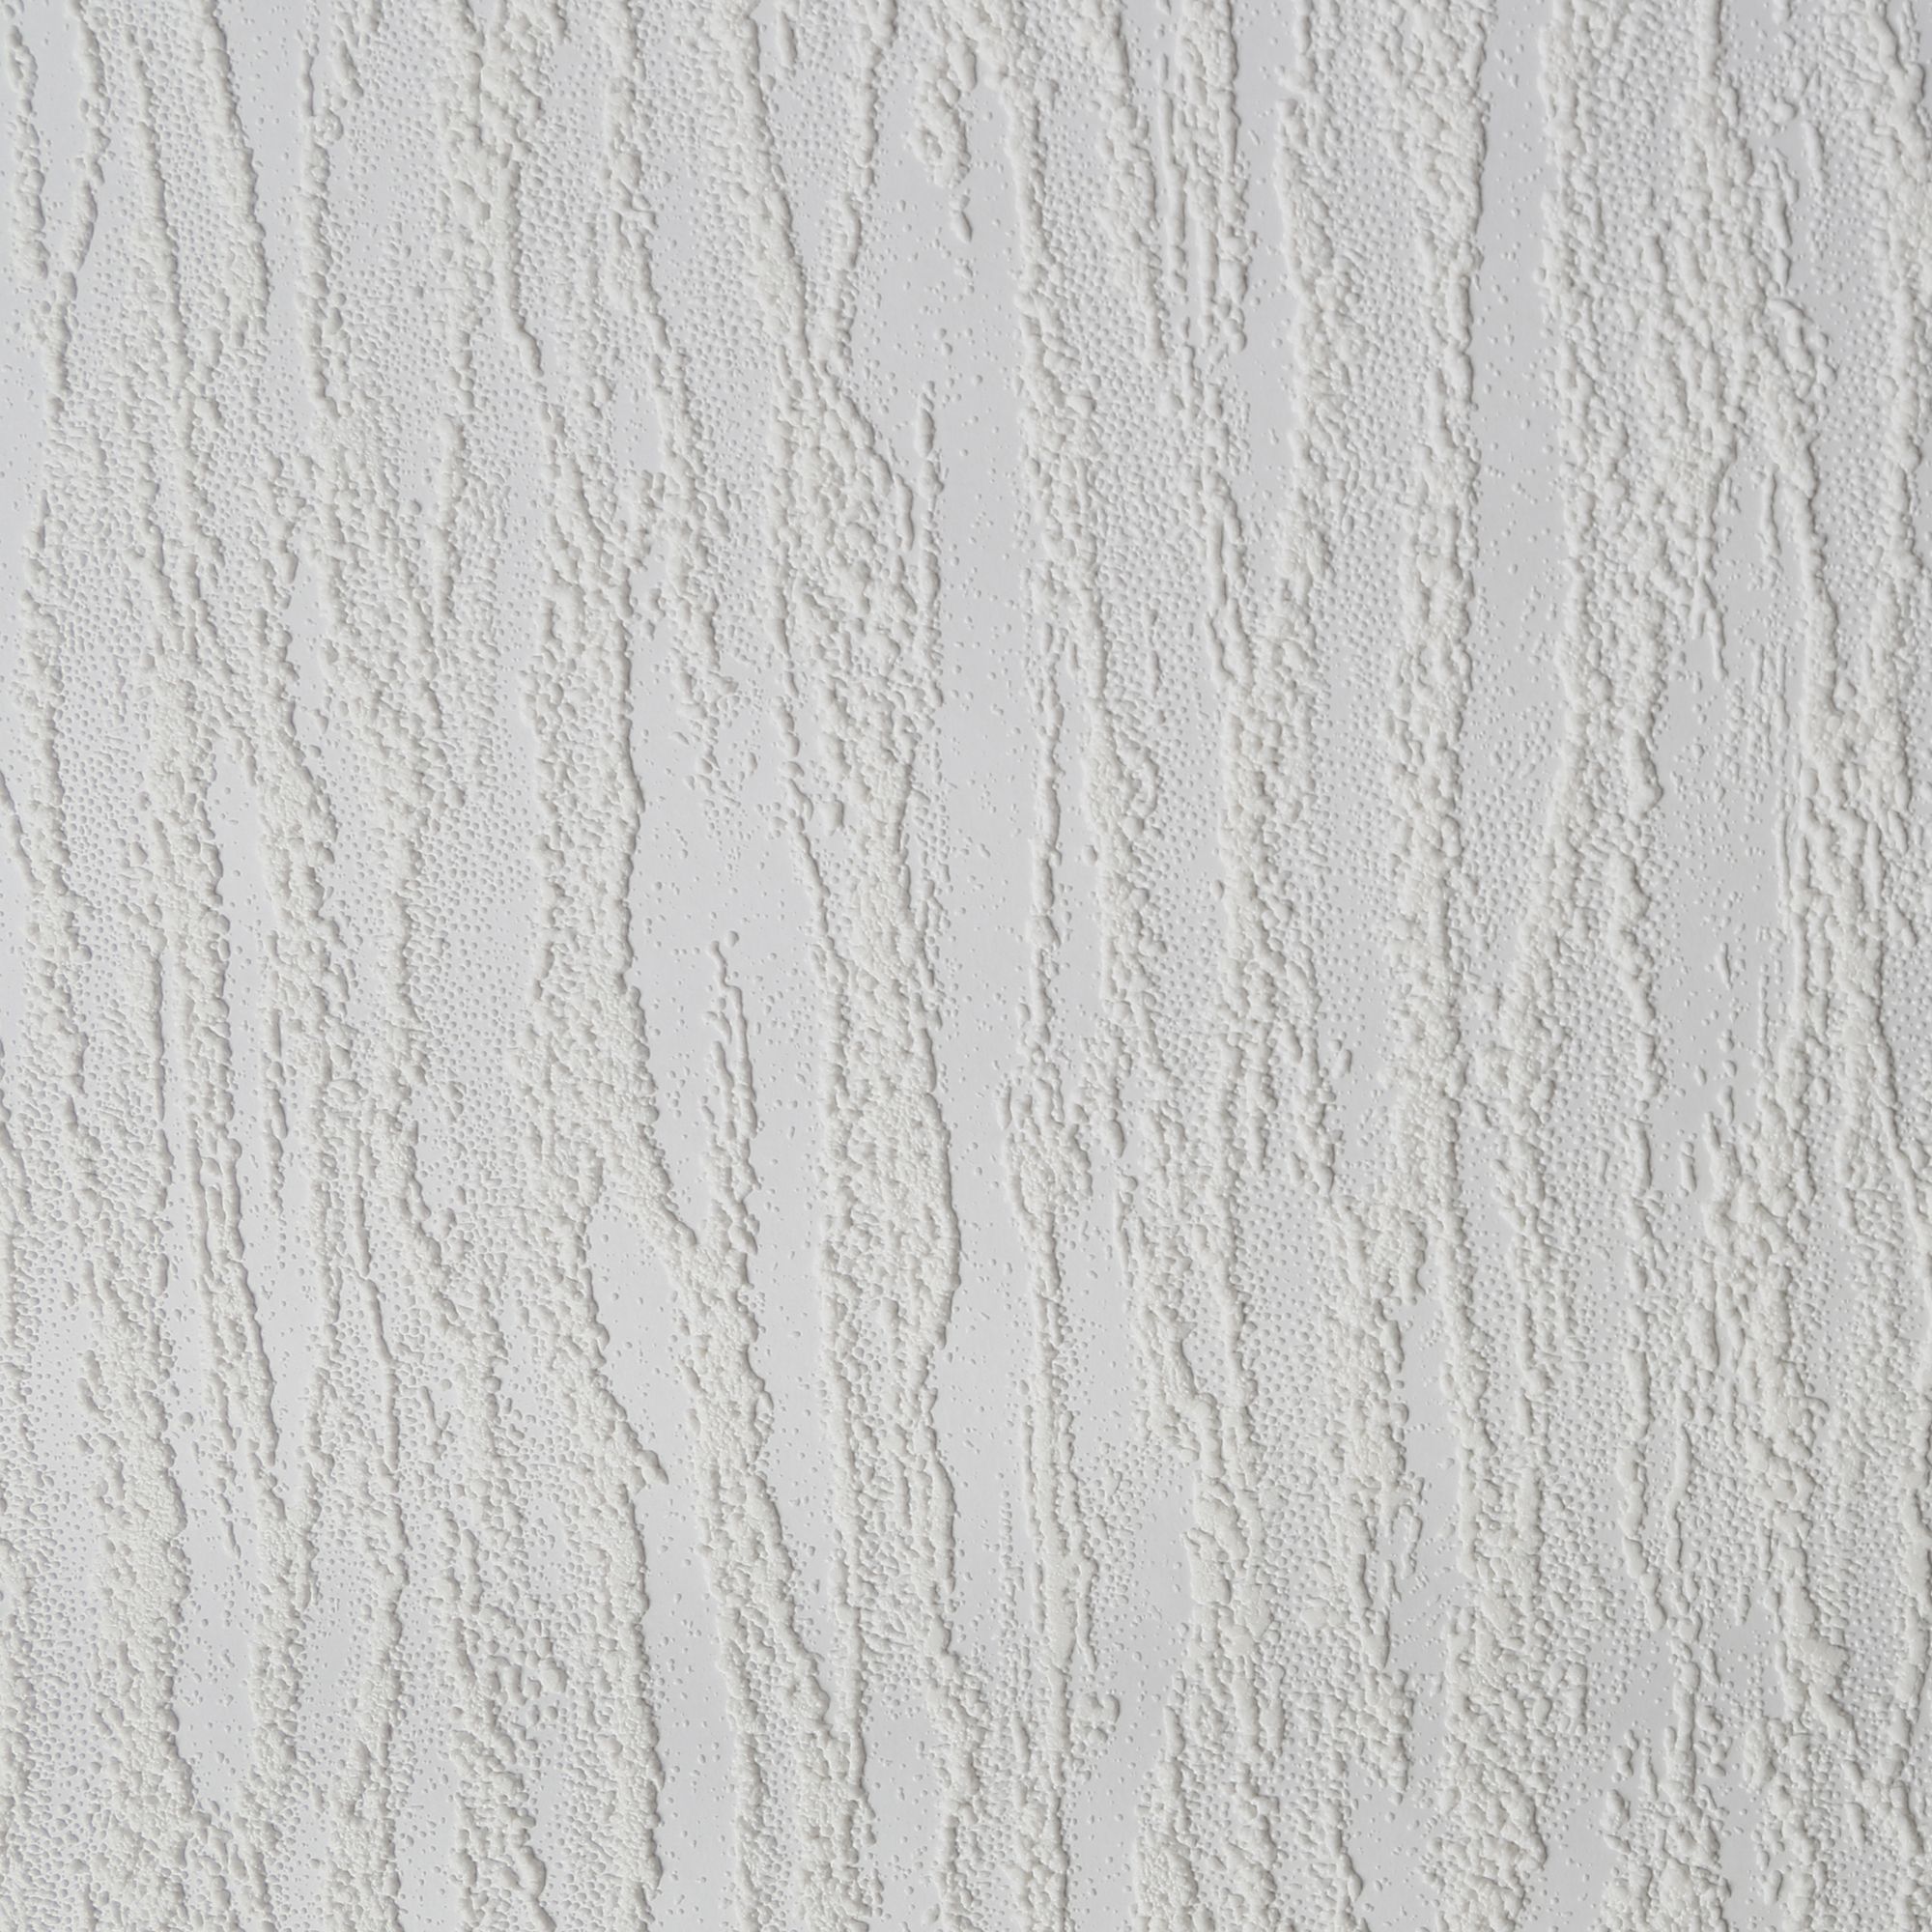 Cholmondeley White Wood effect Textured Wallpaper